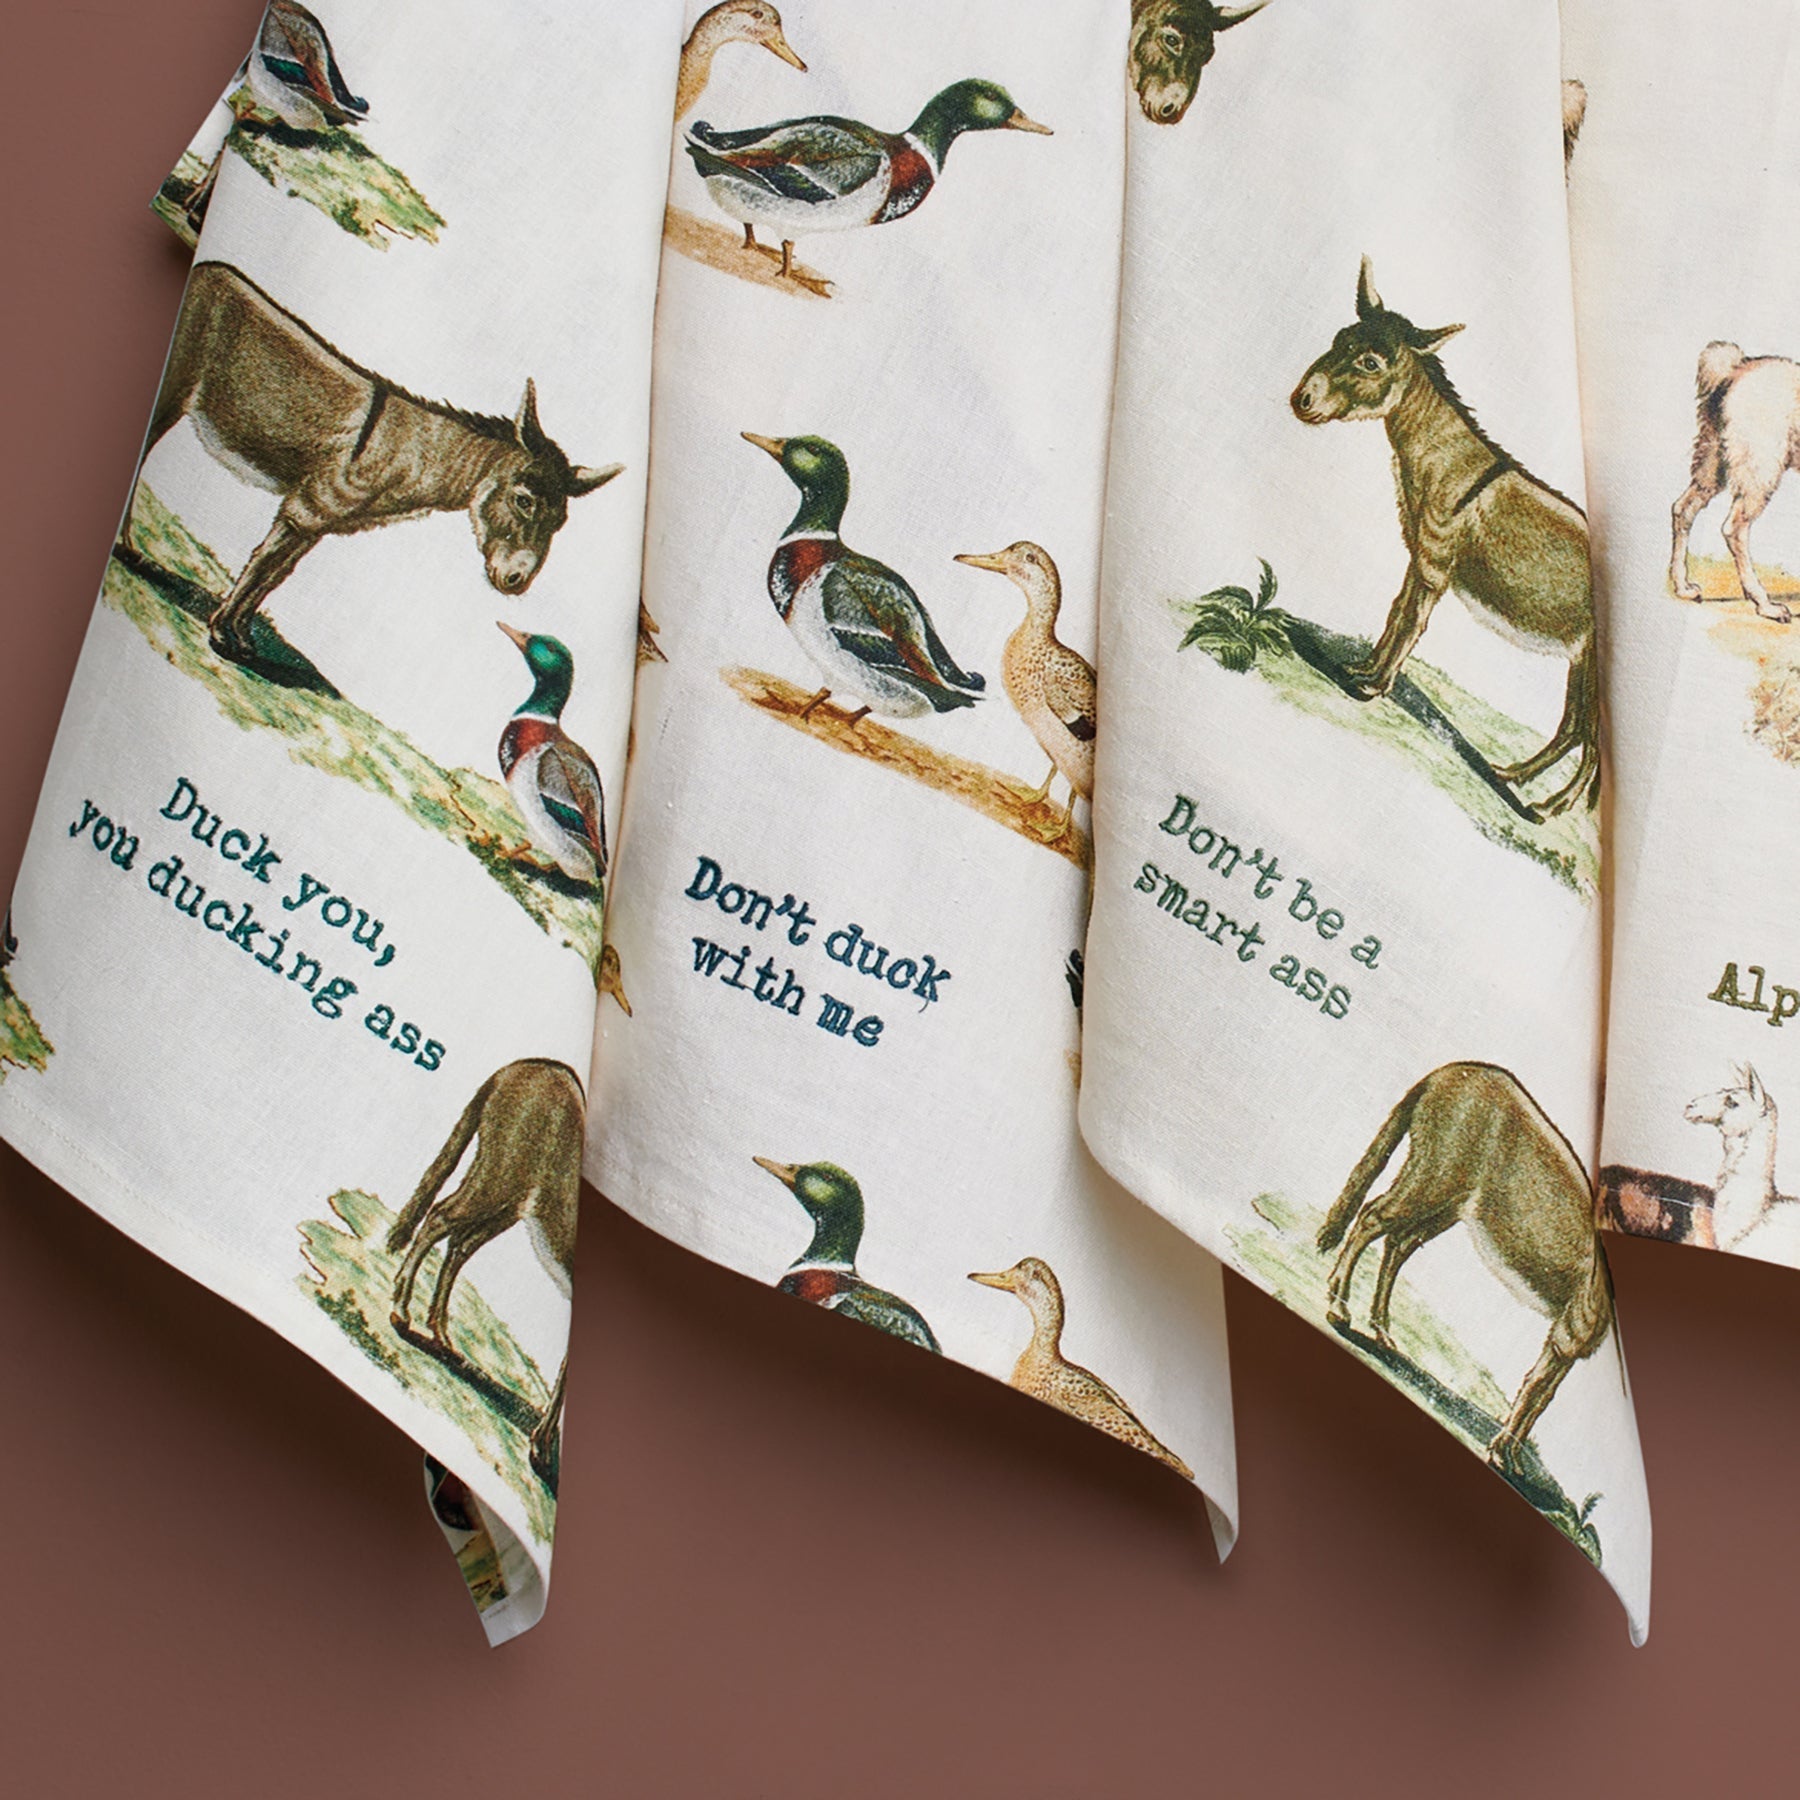 Duck You, You Ducking Ass Dish Cloth Towel | Cotten Linen Novelty Tea Towel | Embroidered Text | 18" x 28"